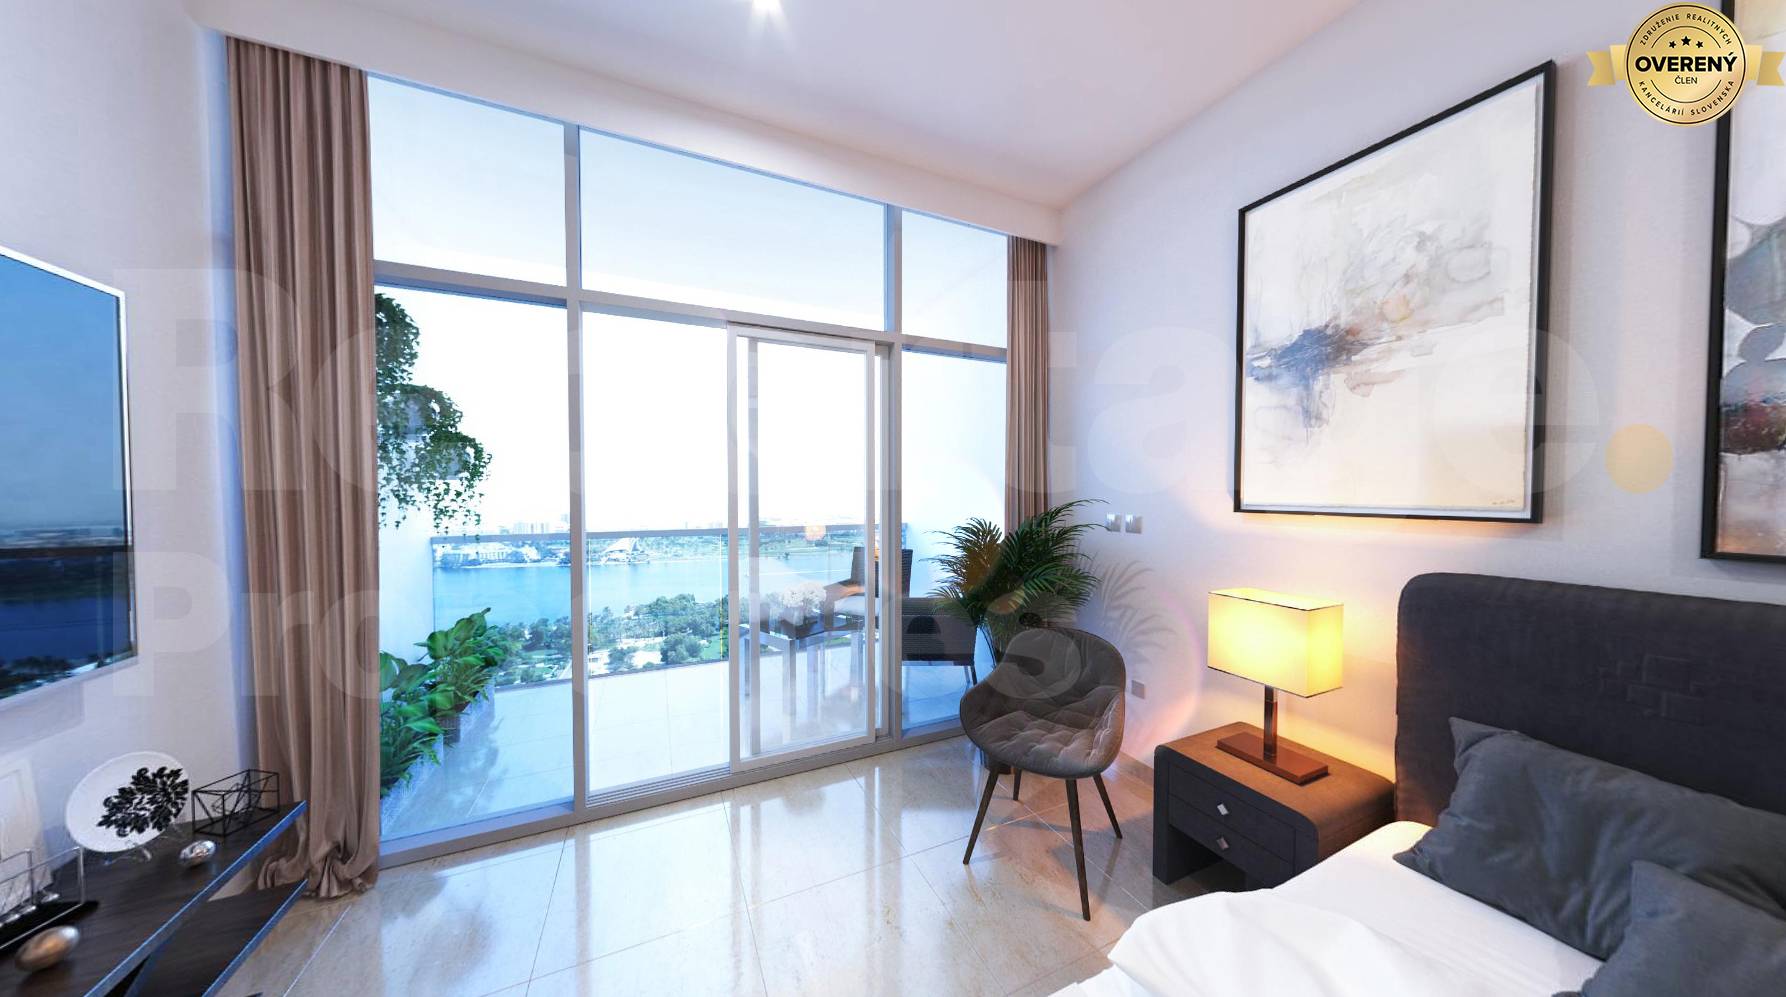 DIVA: ST type B one - room apartman in the Abu Dhabi